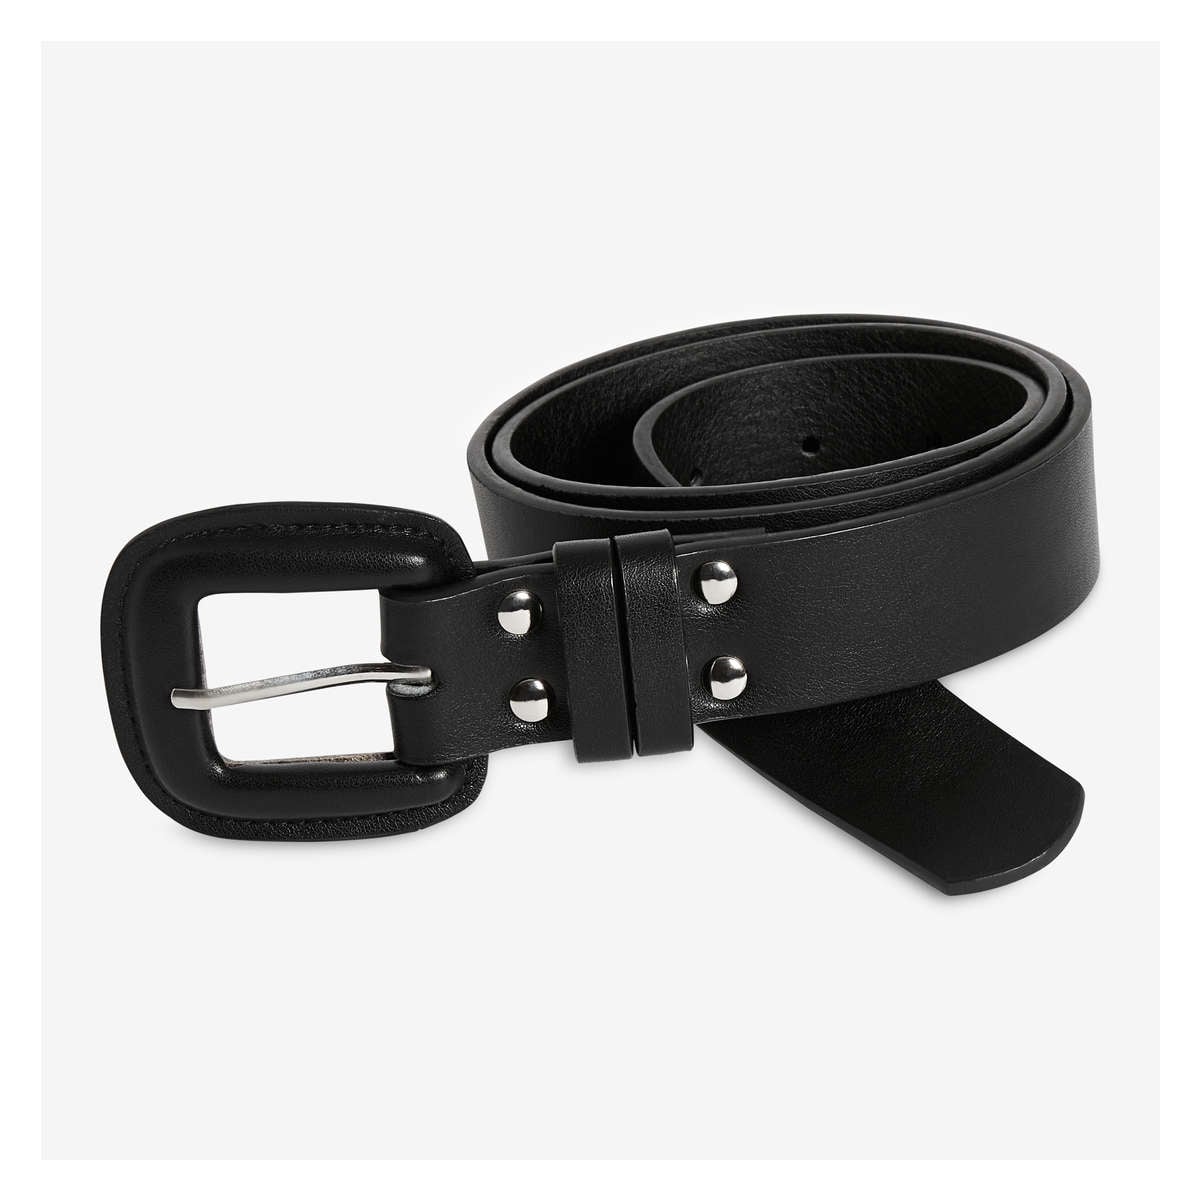 Reversible Vegan Leather Belt in Black from Joe Fresh